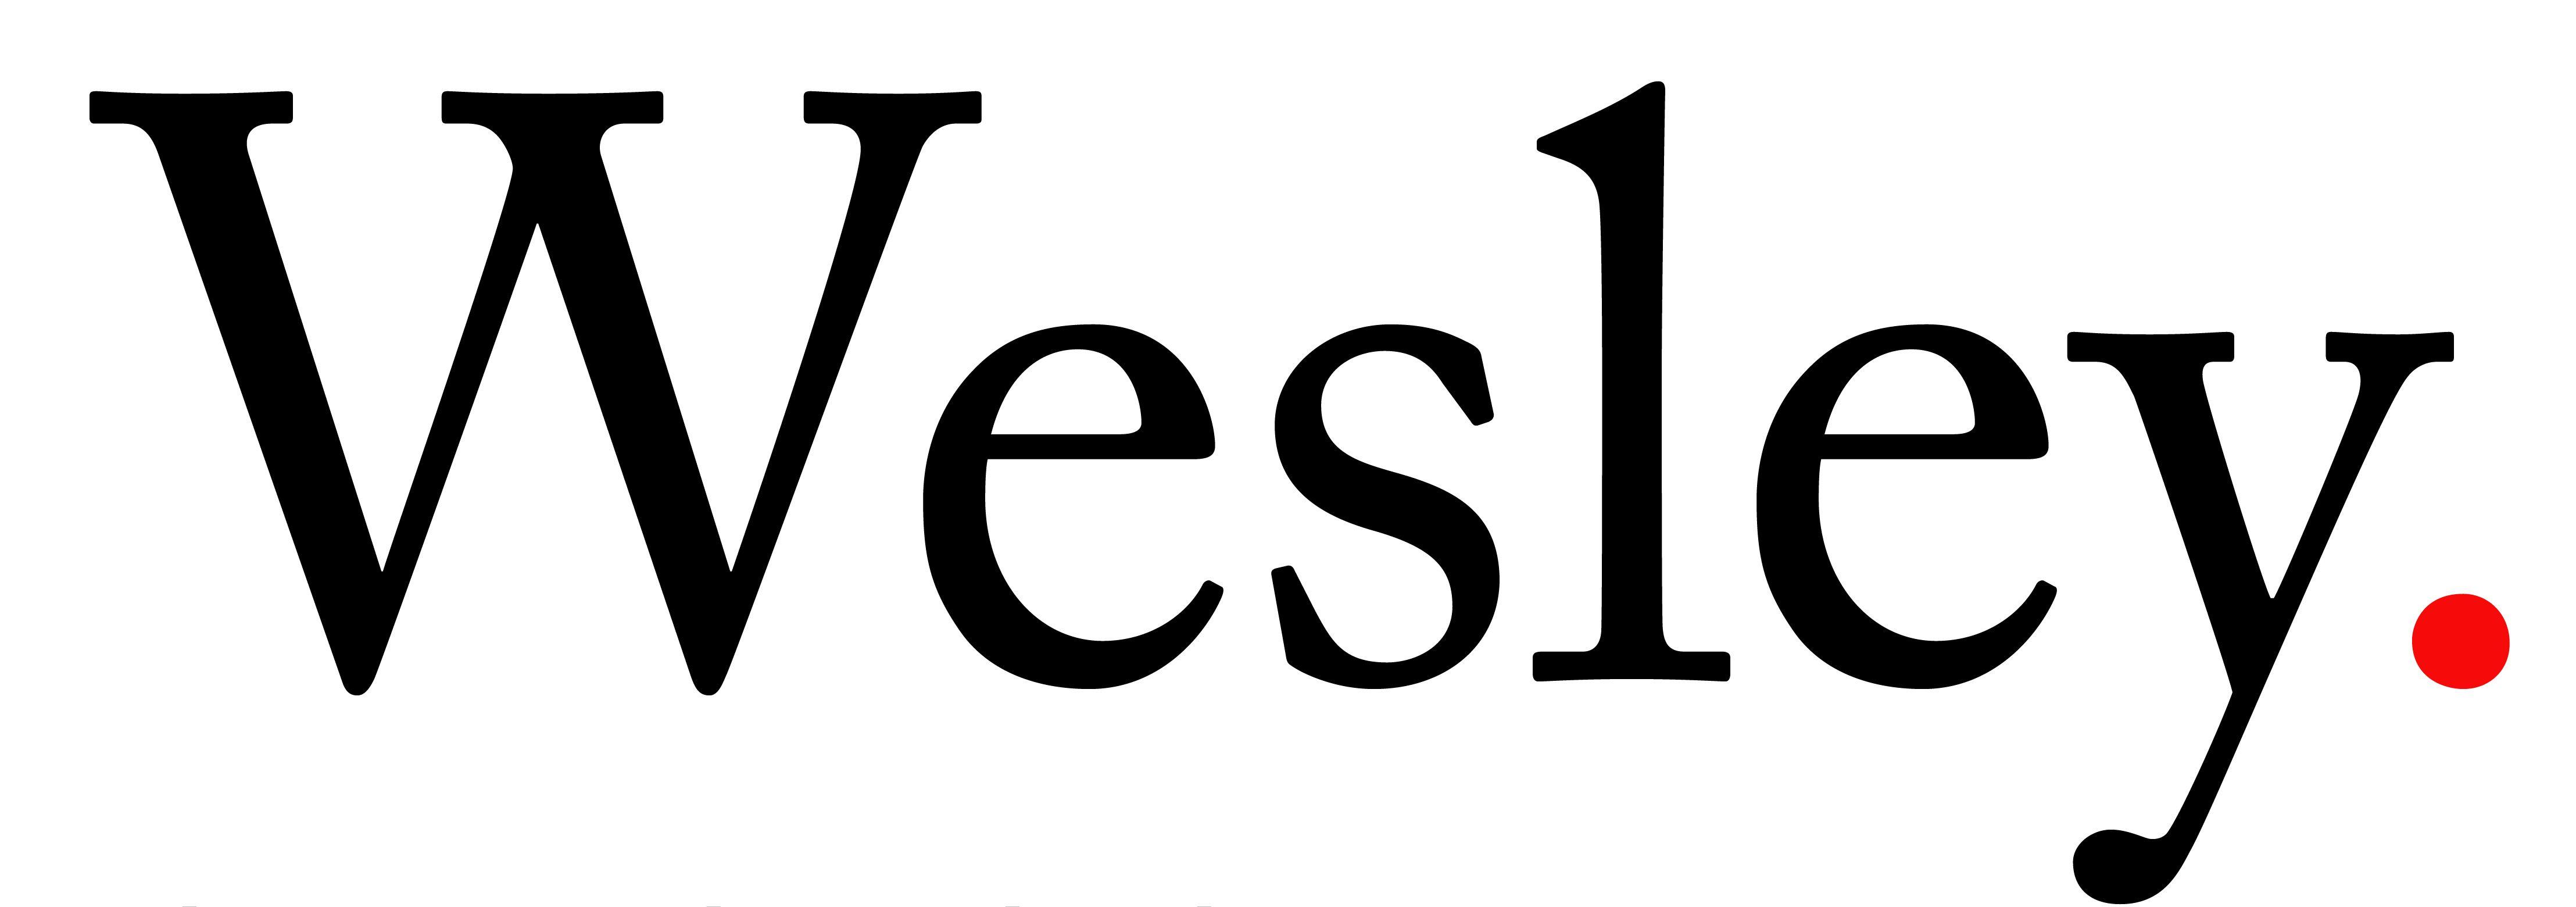 Wesley Logo - Wesley Foundation at Michigan State University